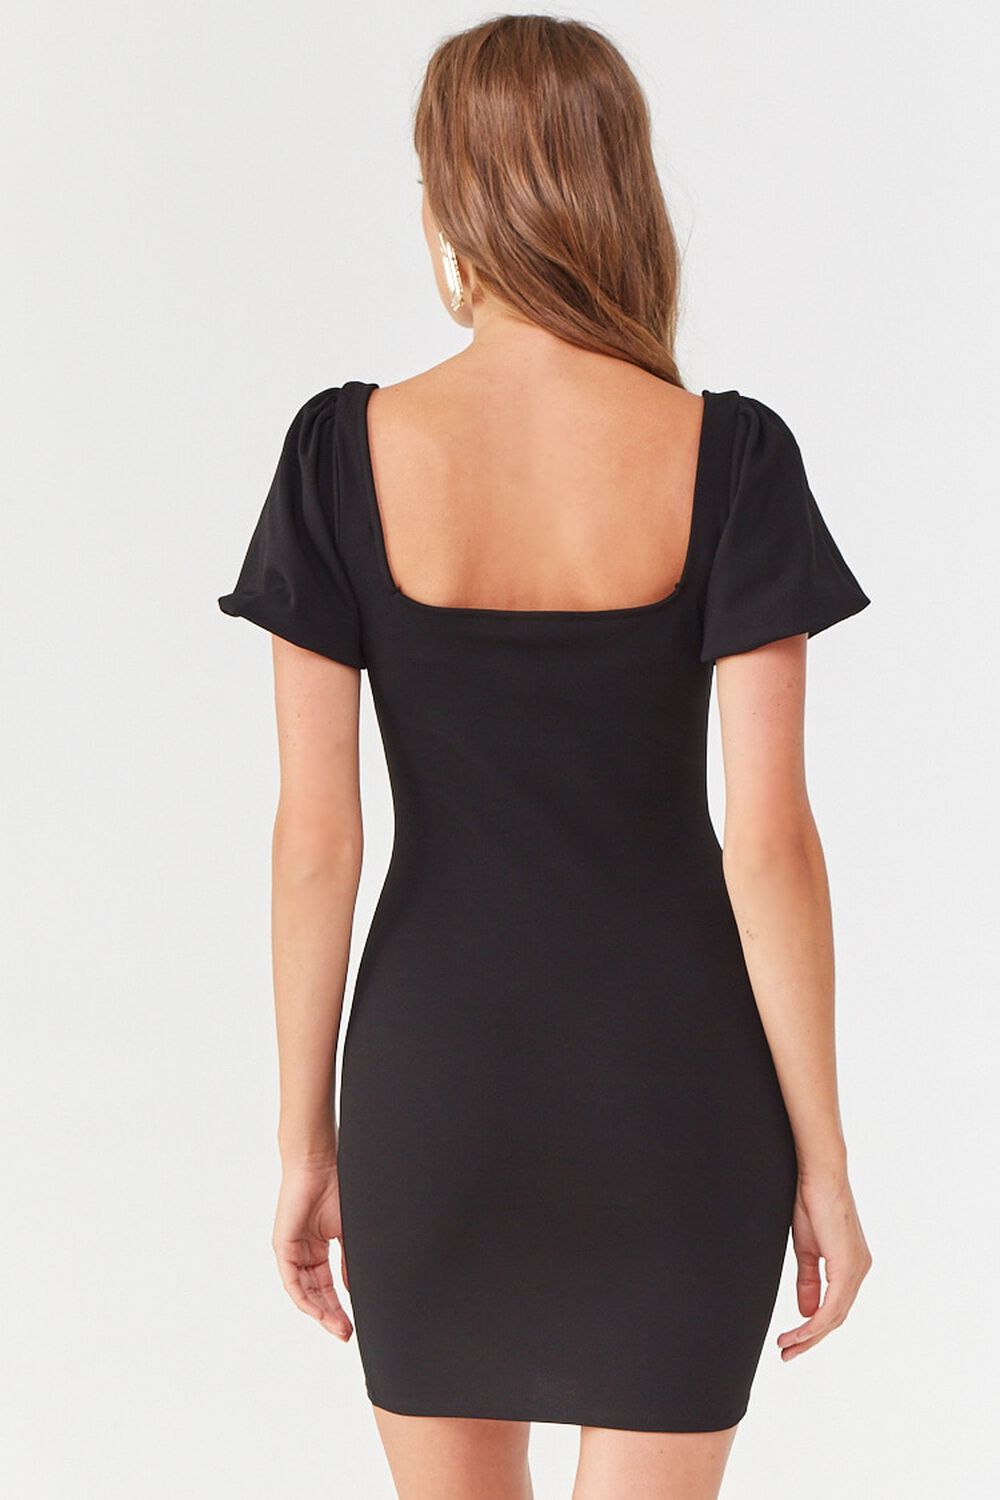 BLACK Puff-Sleeve Bodycon Dress, image 3